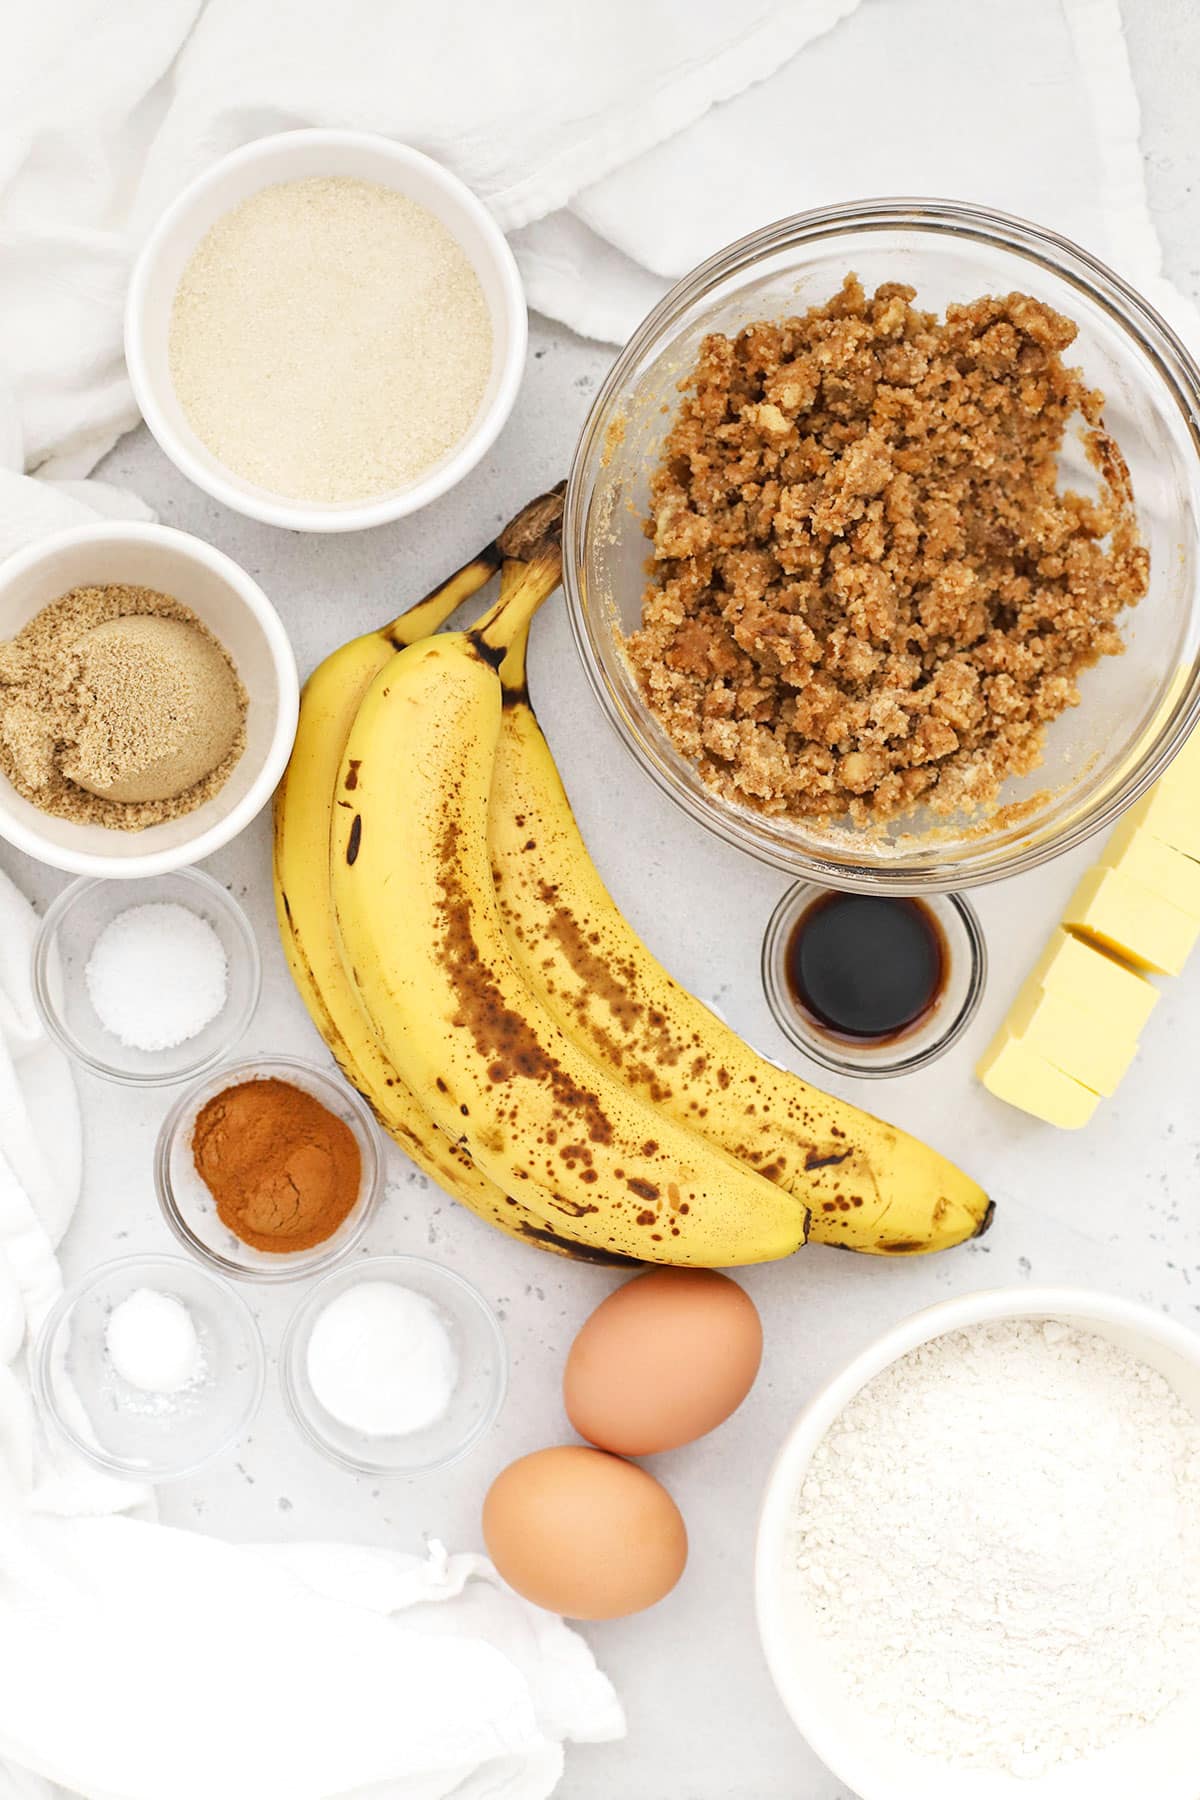 Ingredients for gluten-free banana crumb muffins